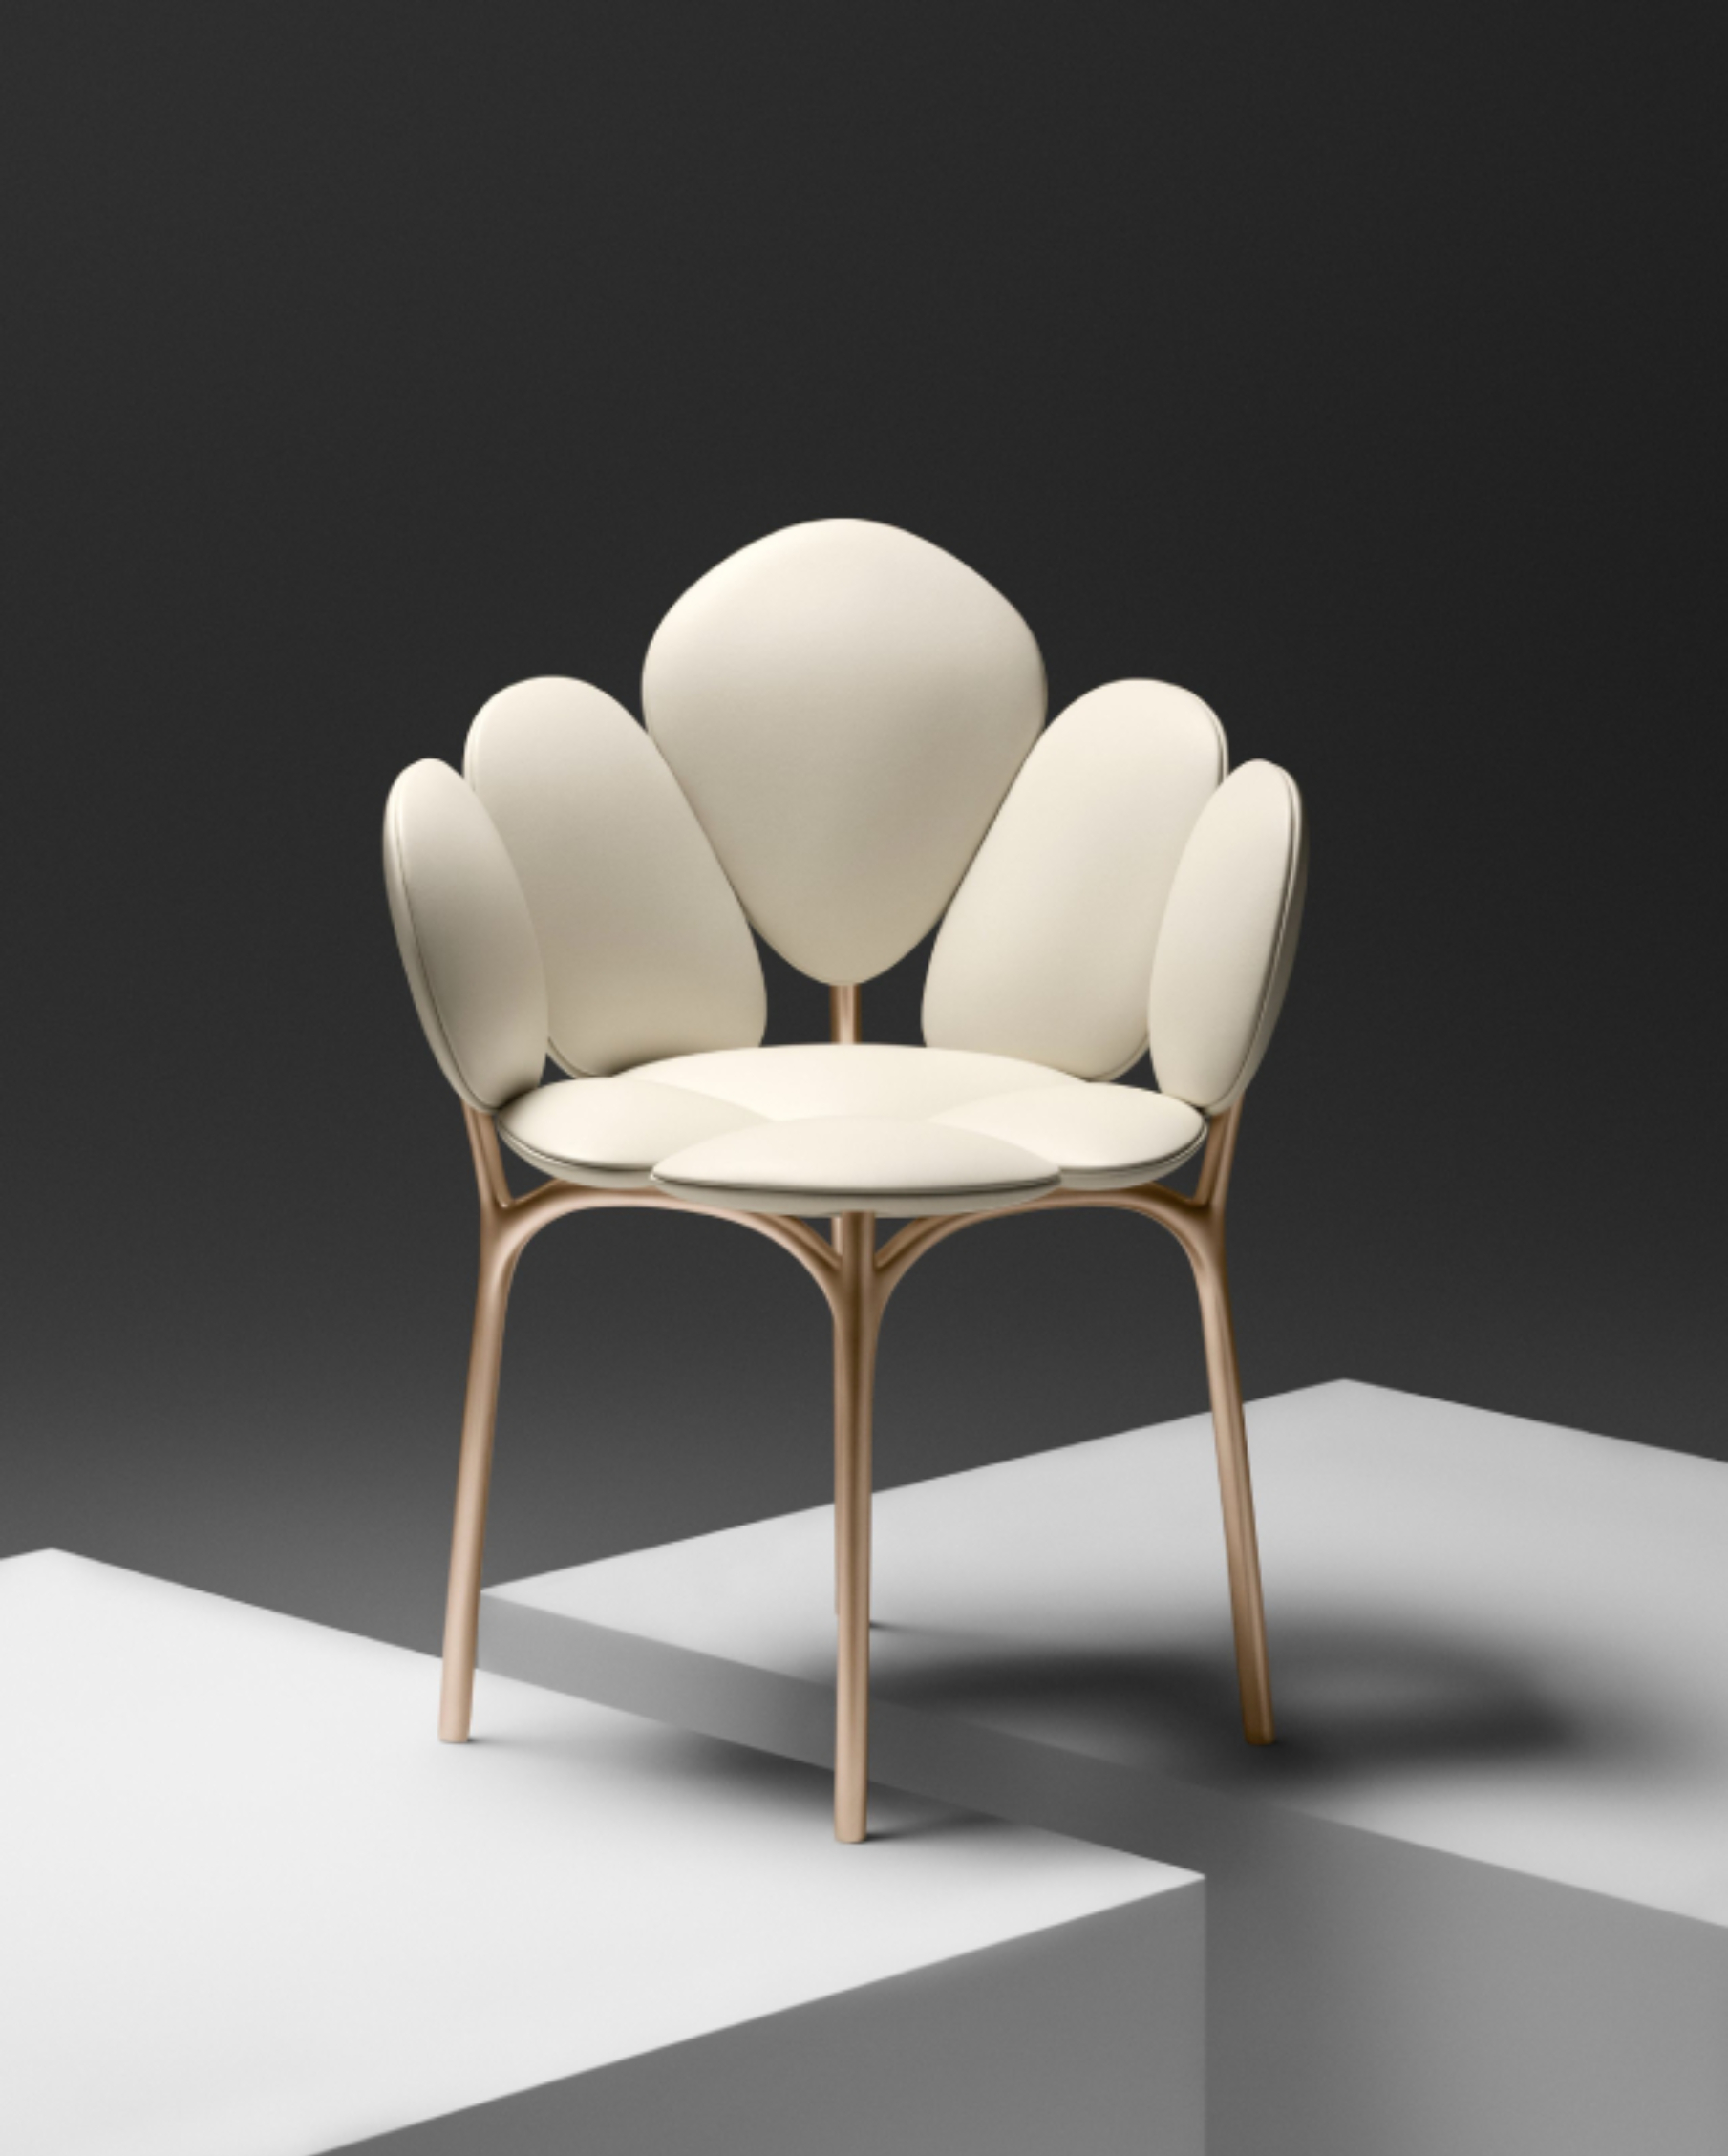 Marcel Wanders studio - Petal Chair 